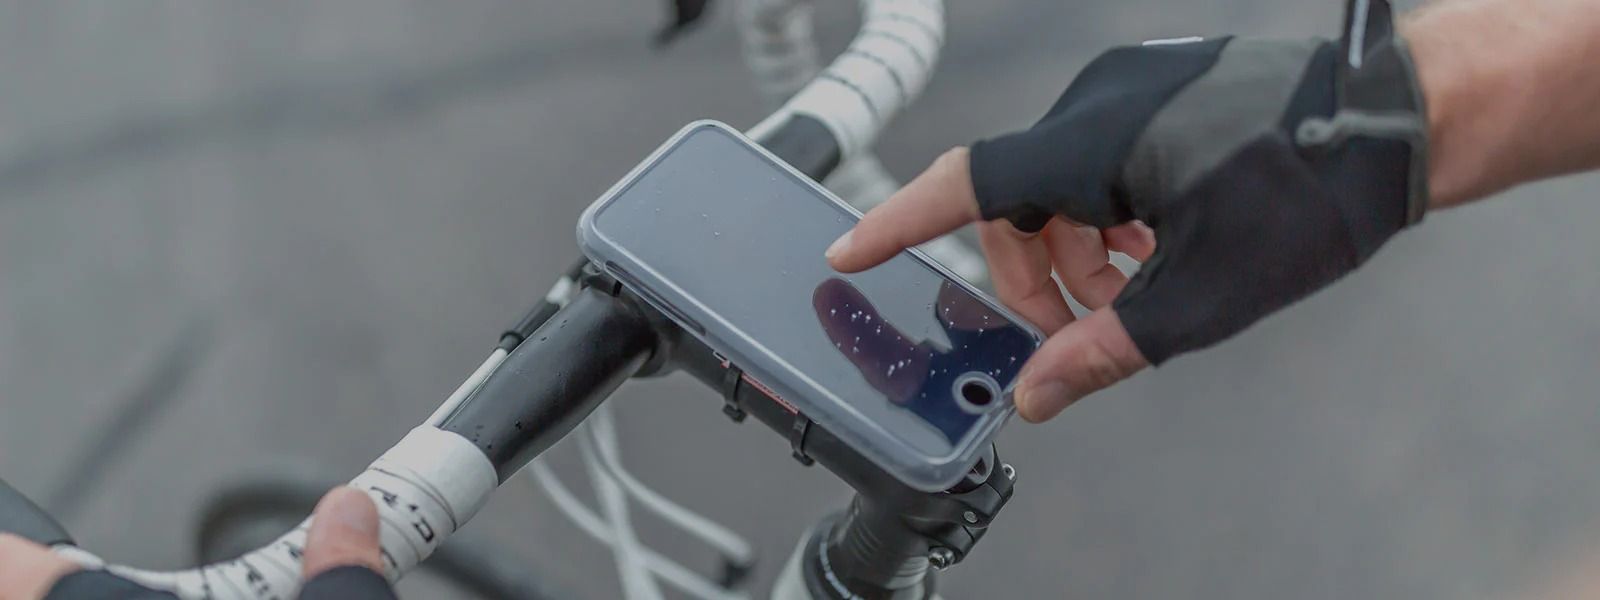 Bike Kits - iPhone - Quad Lock® UK - Official Store